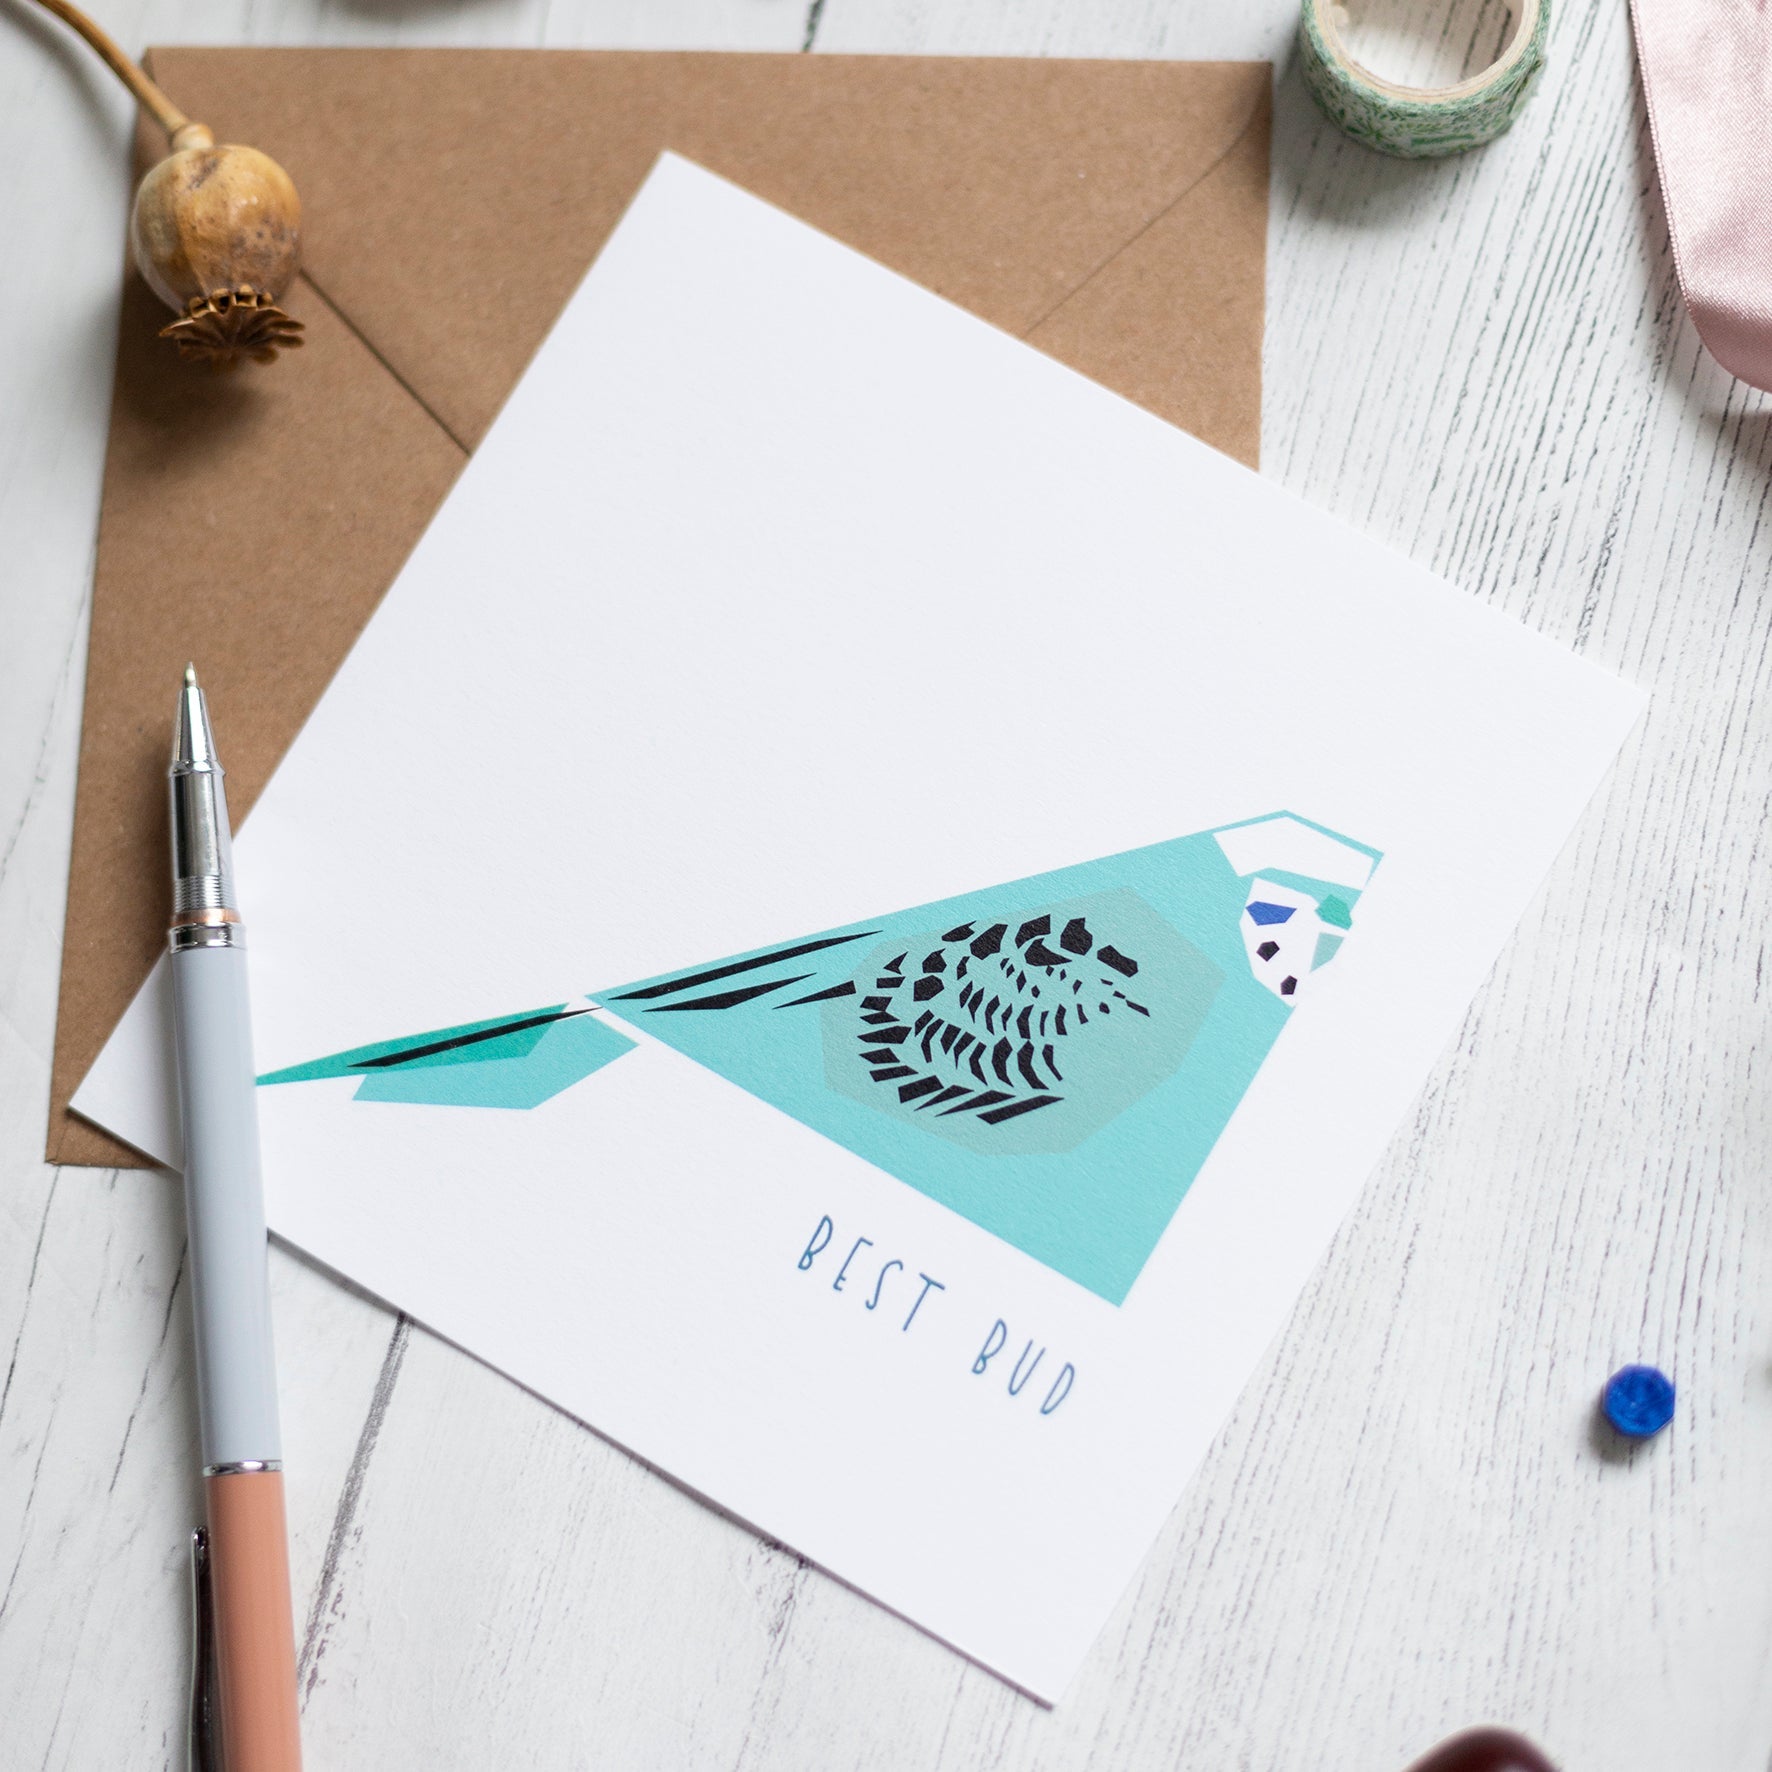 Best Bud - Twenty Birds Greetings Card